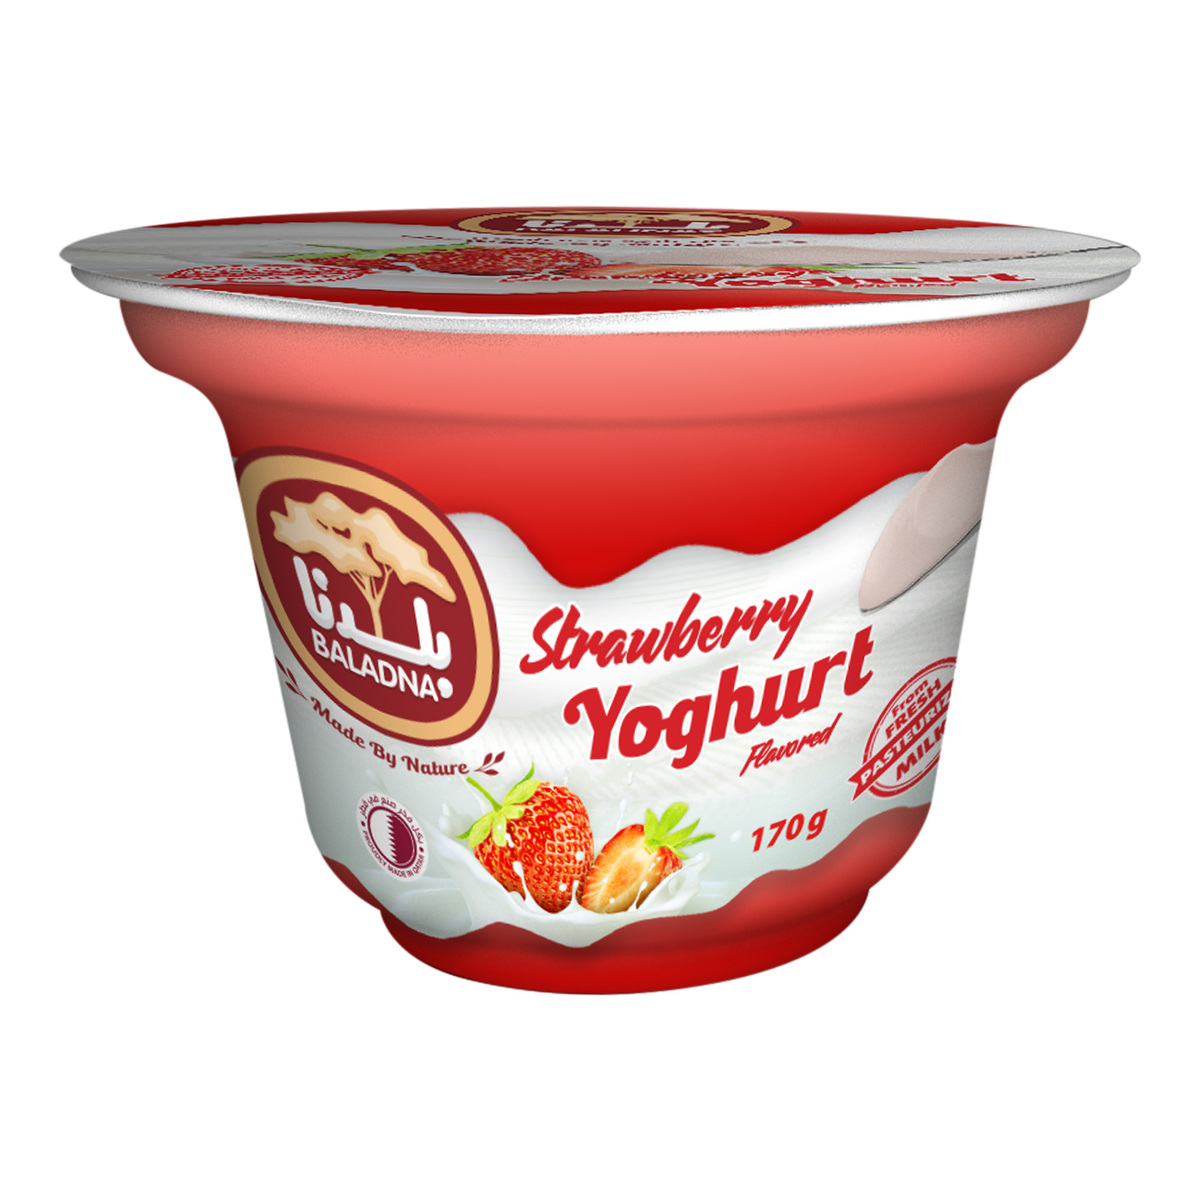 Baladna Strawberry Flavored Yoghurt 170 g